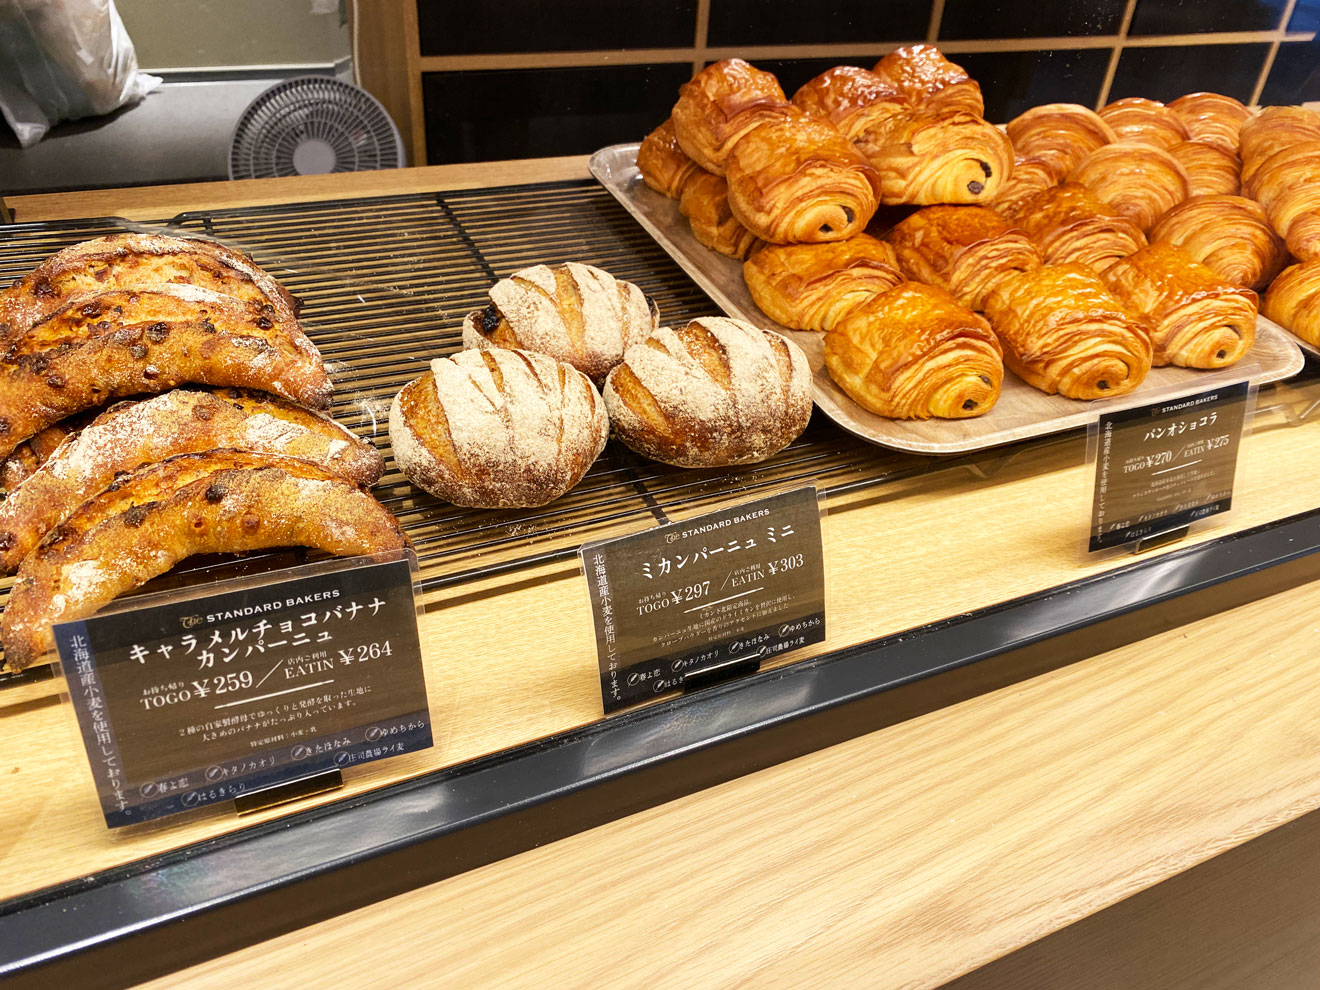 「THE STANDARD BAKERS 下北沢店」の菓子パン